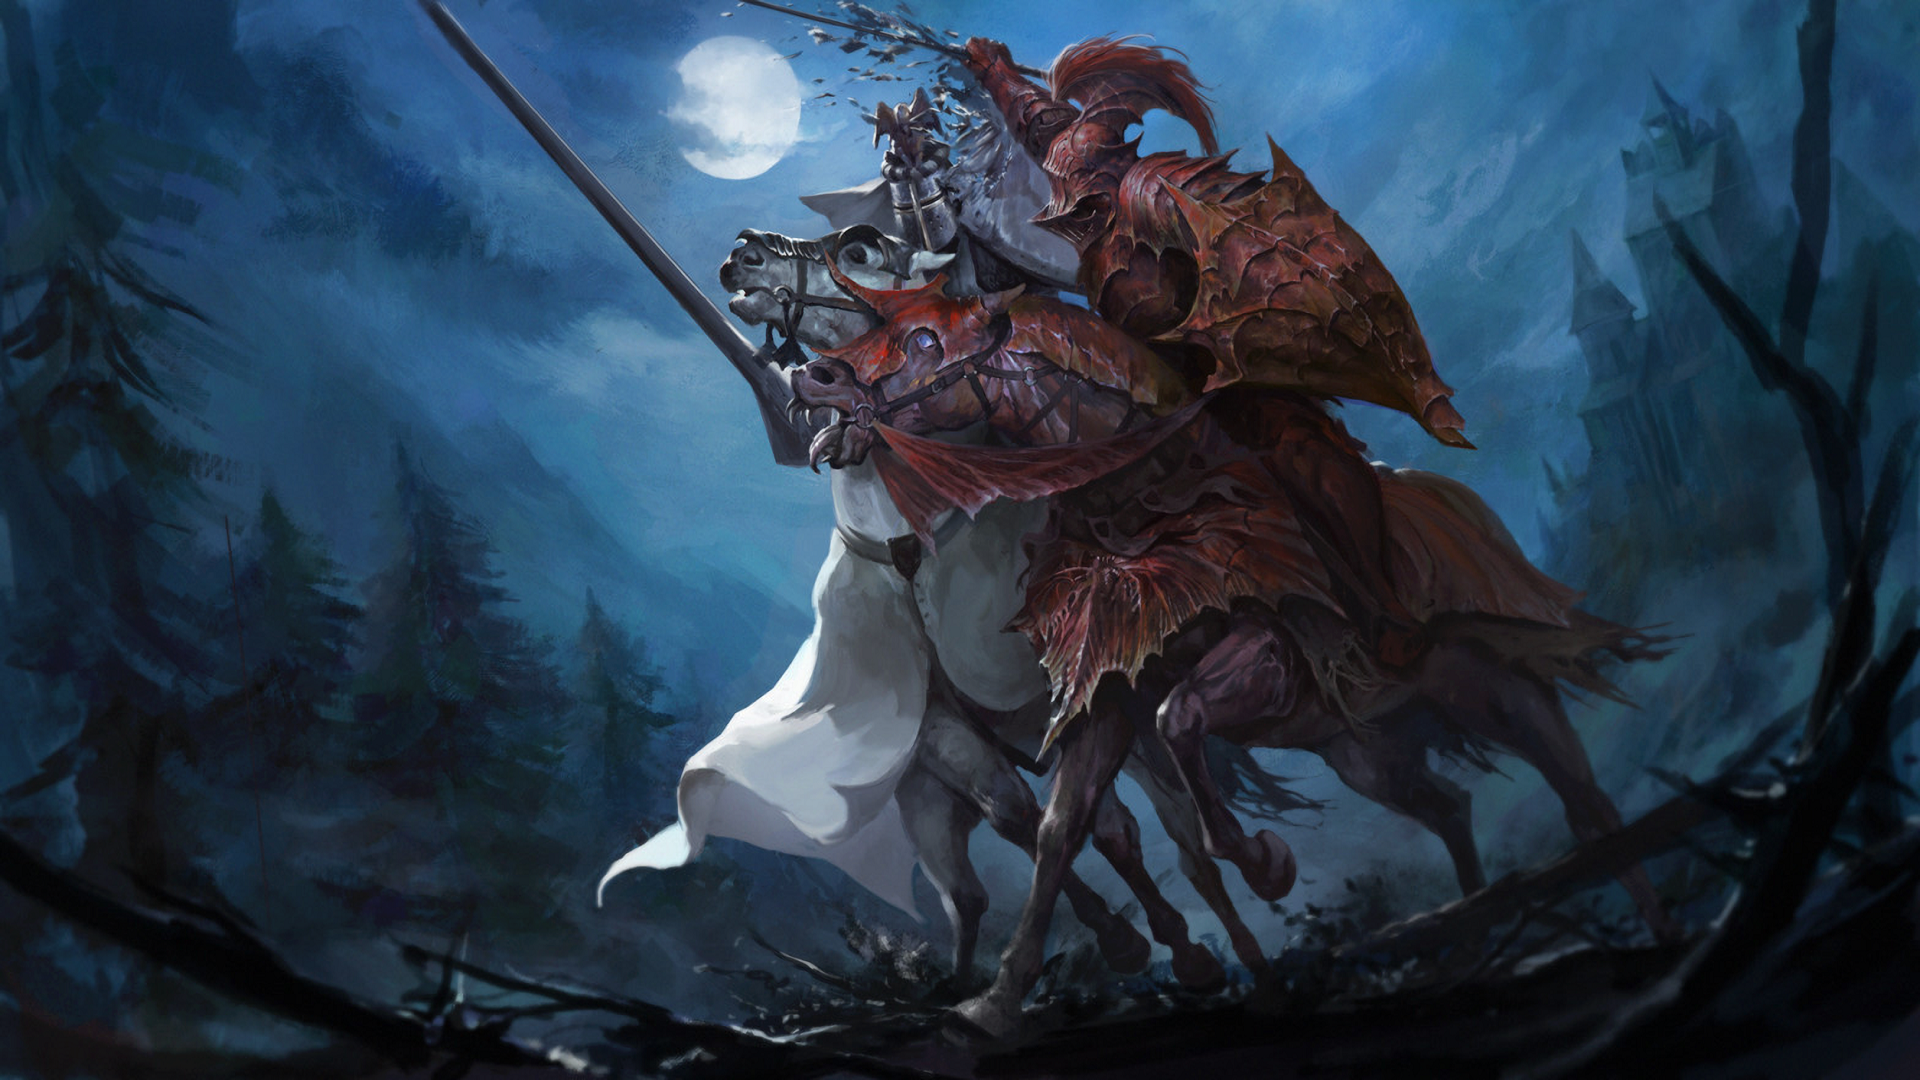 warhammer fantasy wallpaper,cg artwork,fictional character,demon,mythology,illustration